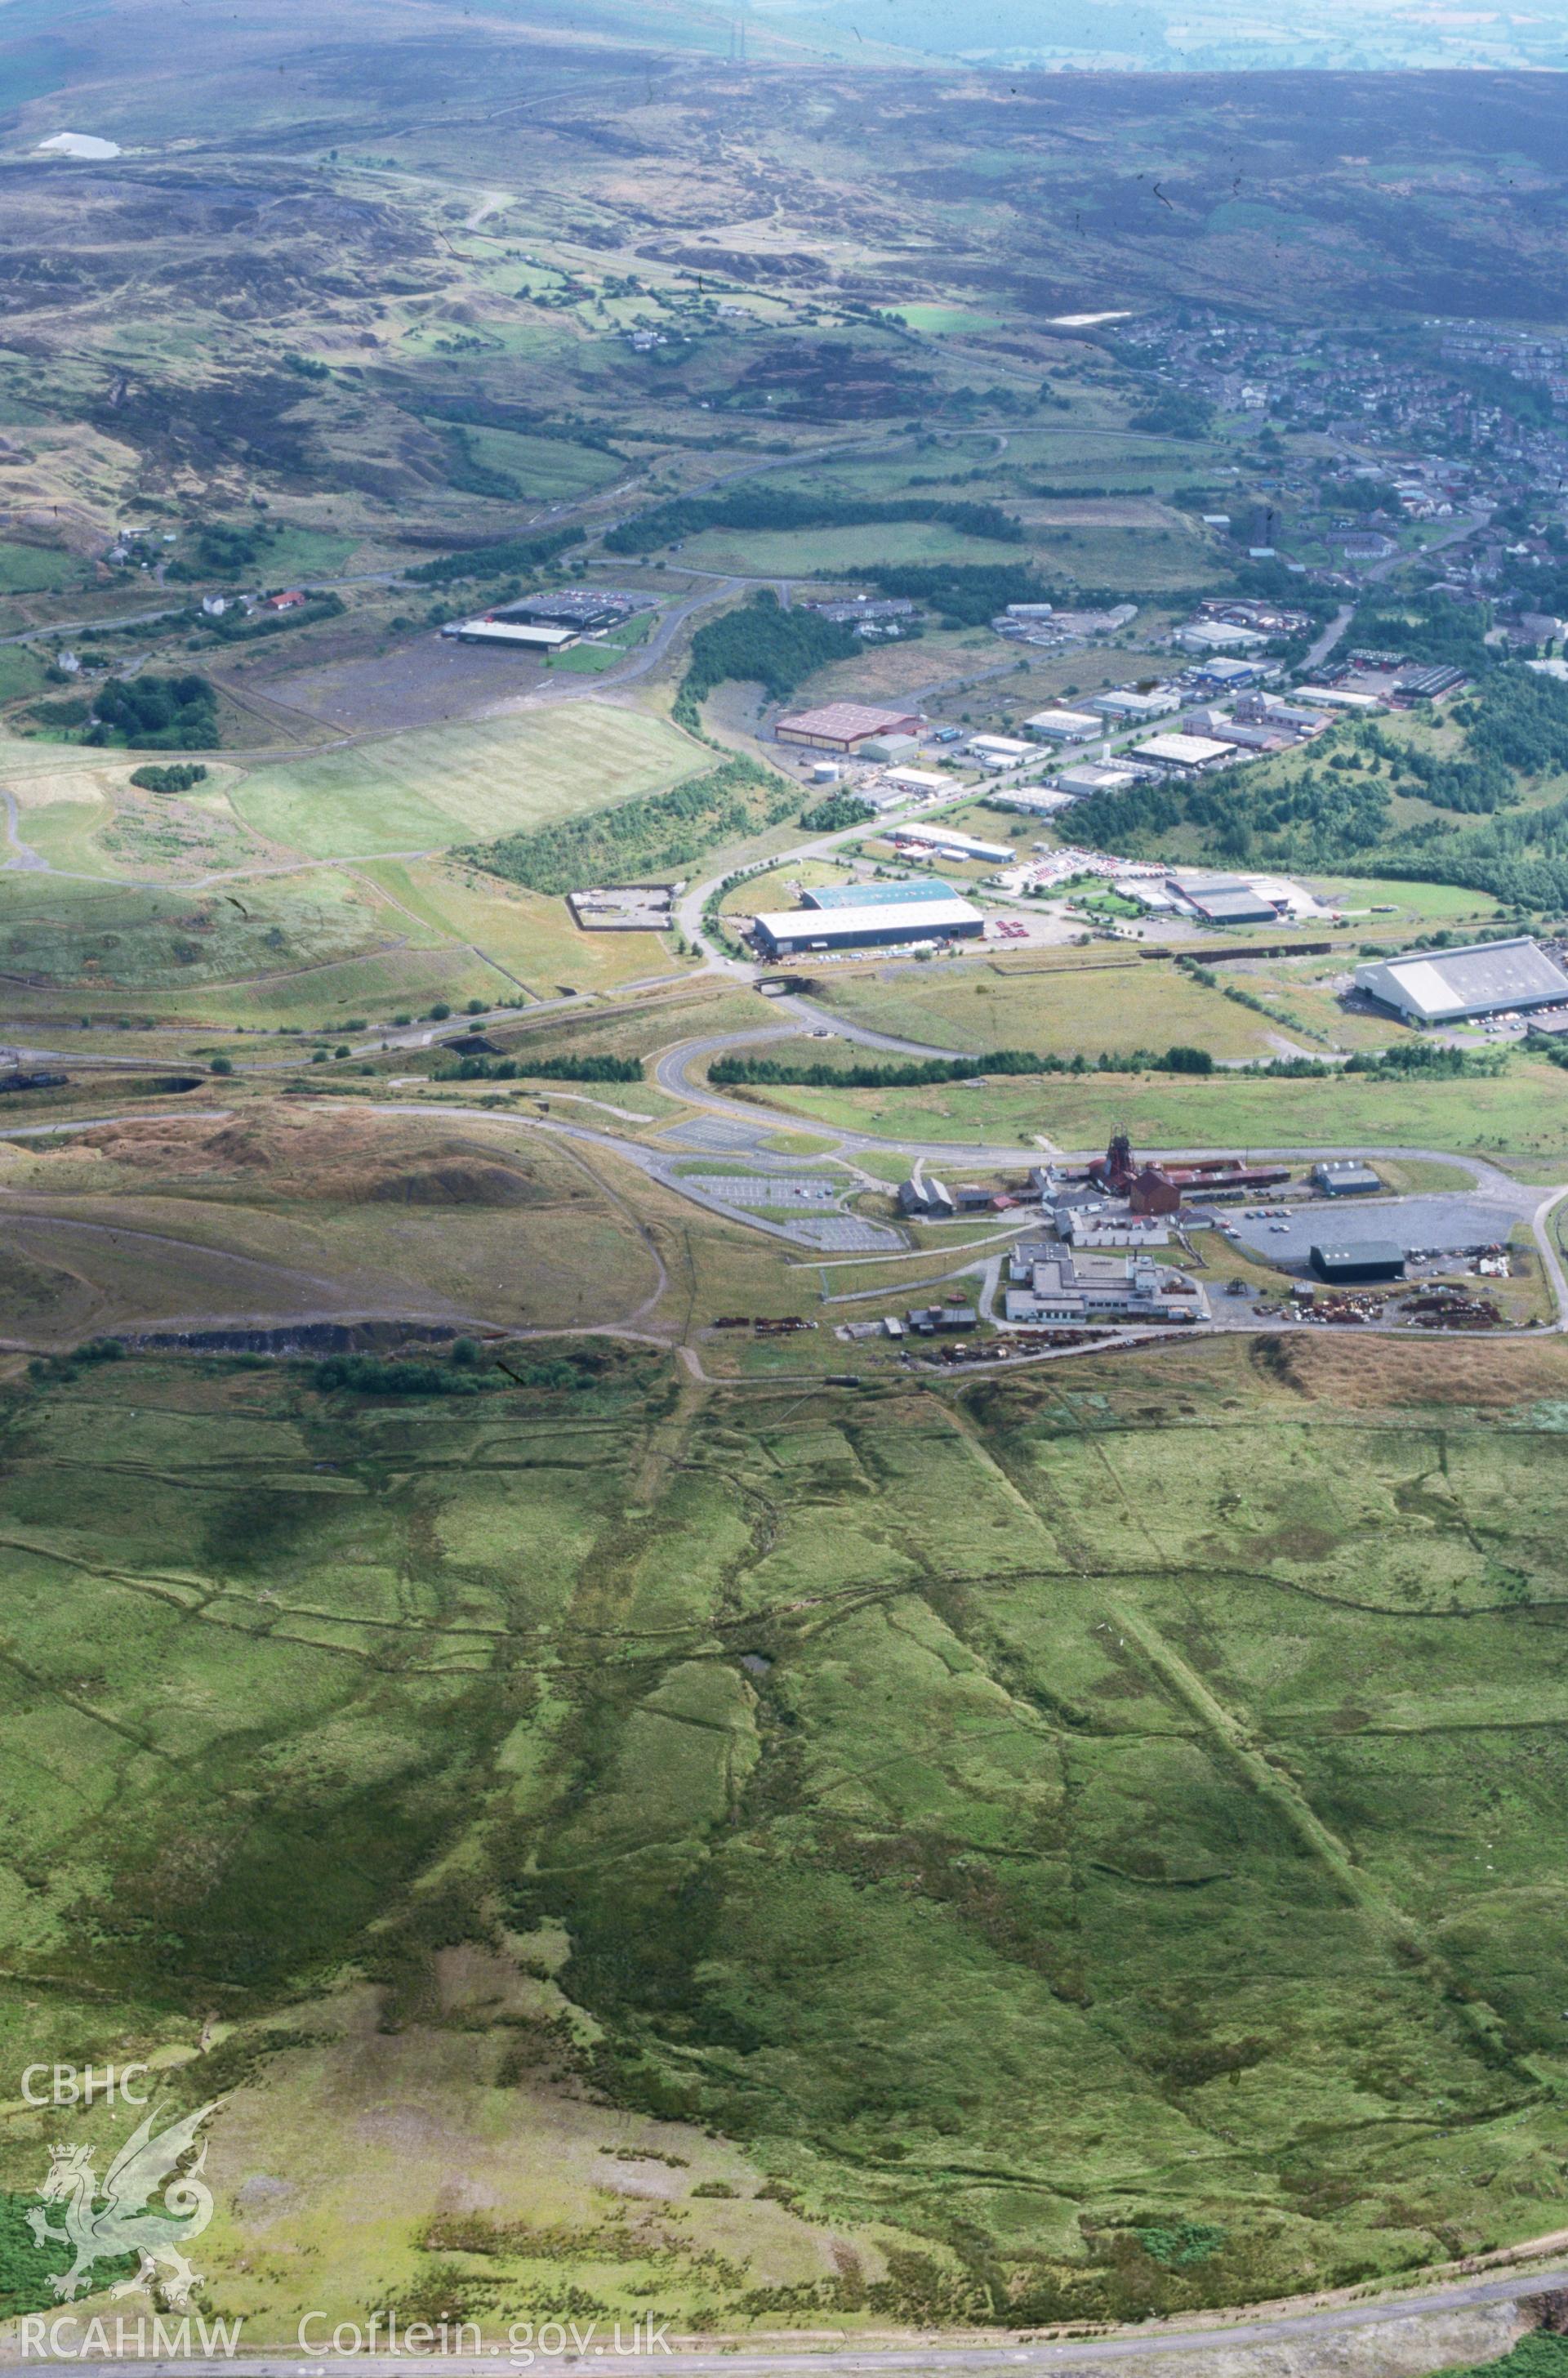 Slide of RCAHMW colour oblique aerial photograph of Big Pit Coal Mine, Blaenavon, taken by C.R. Musson, 24/7/1998.